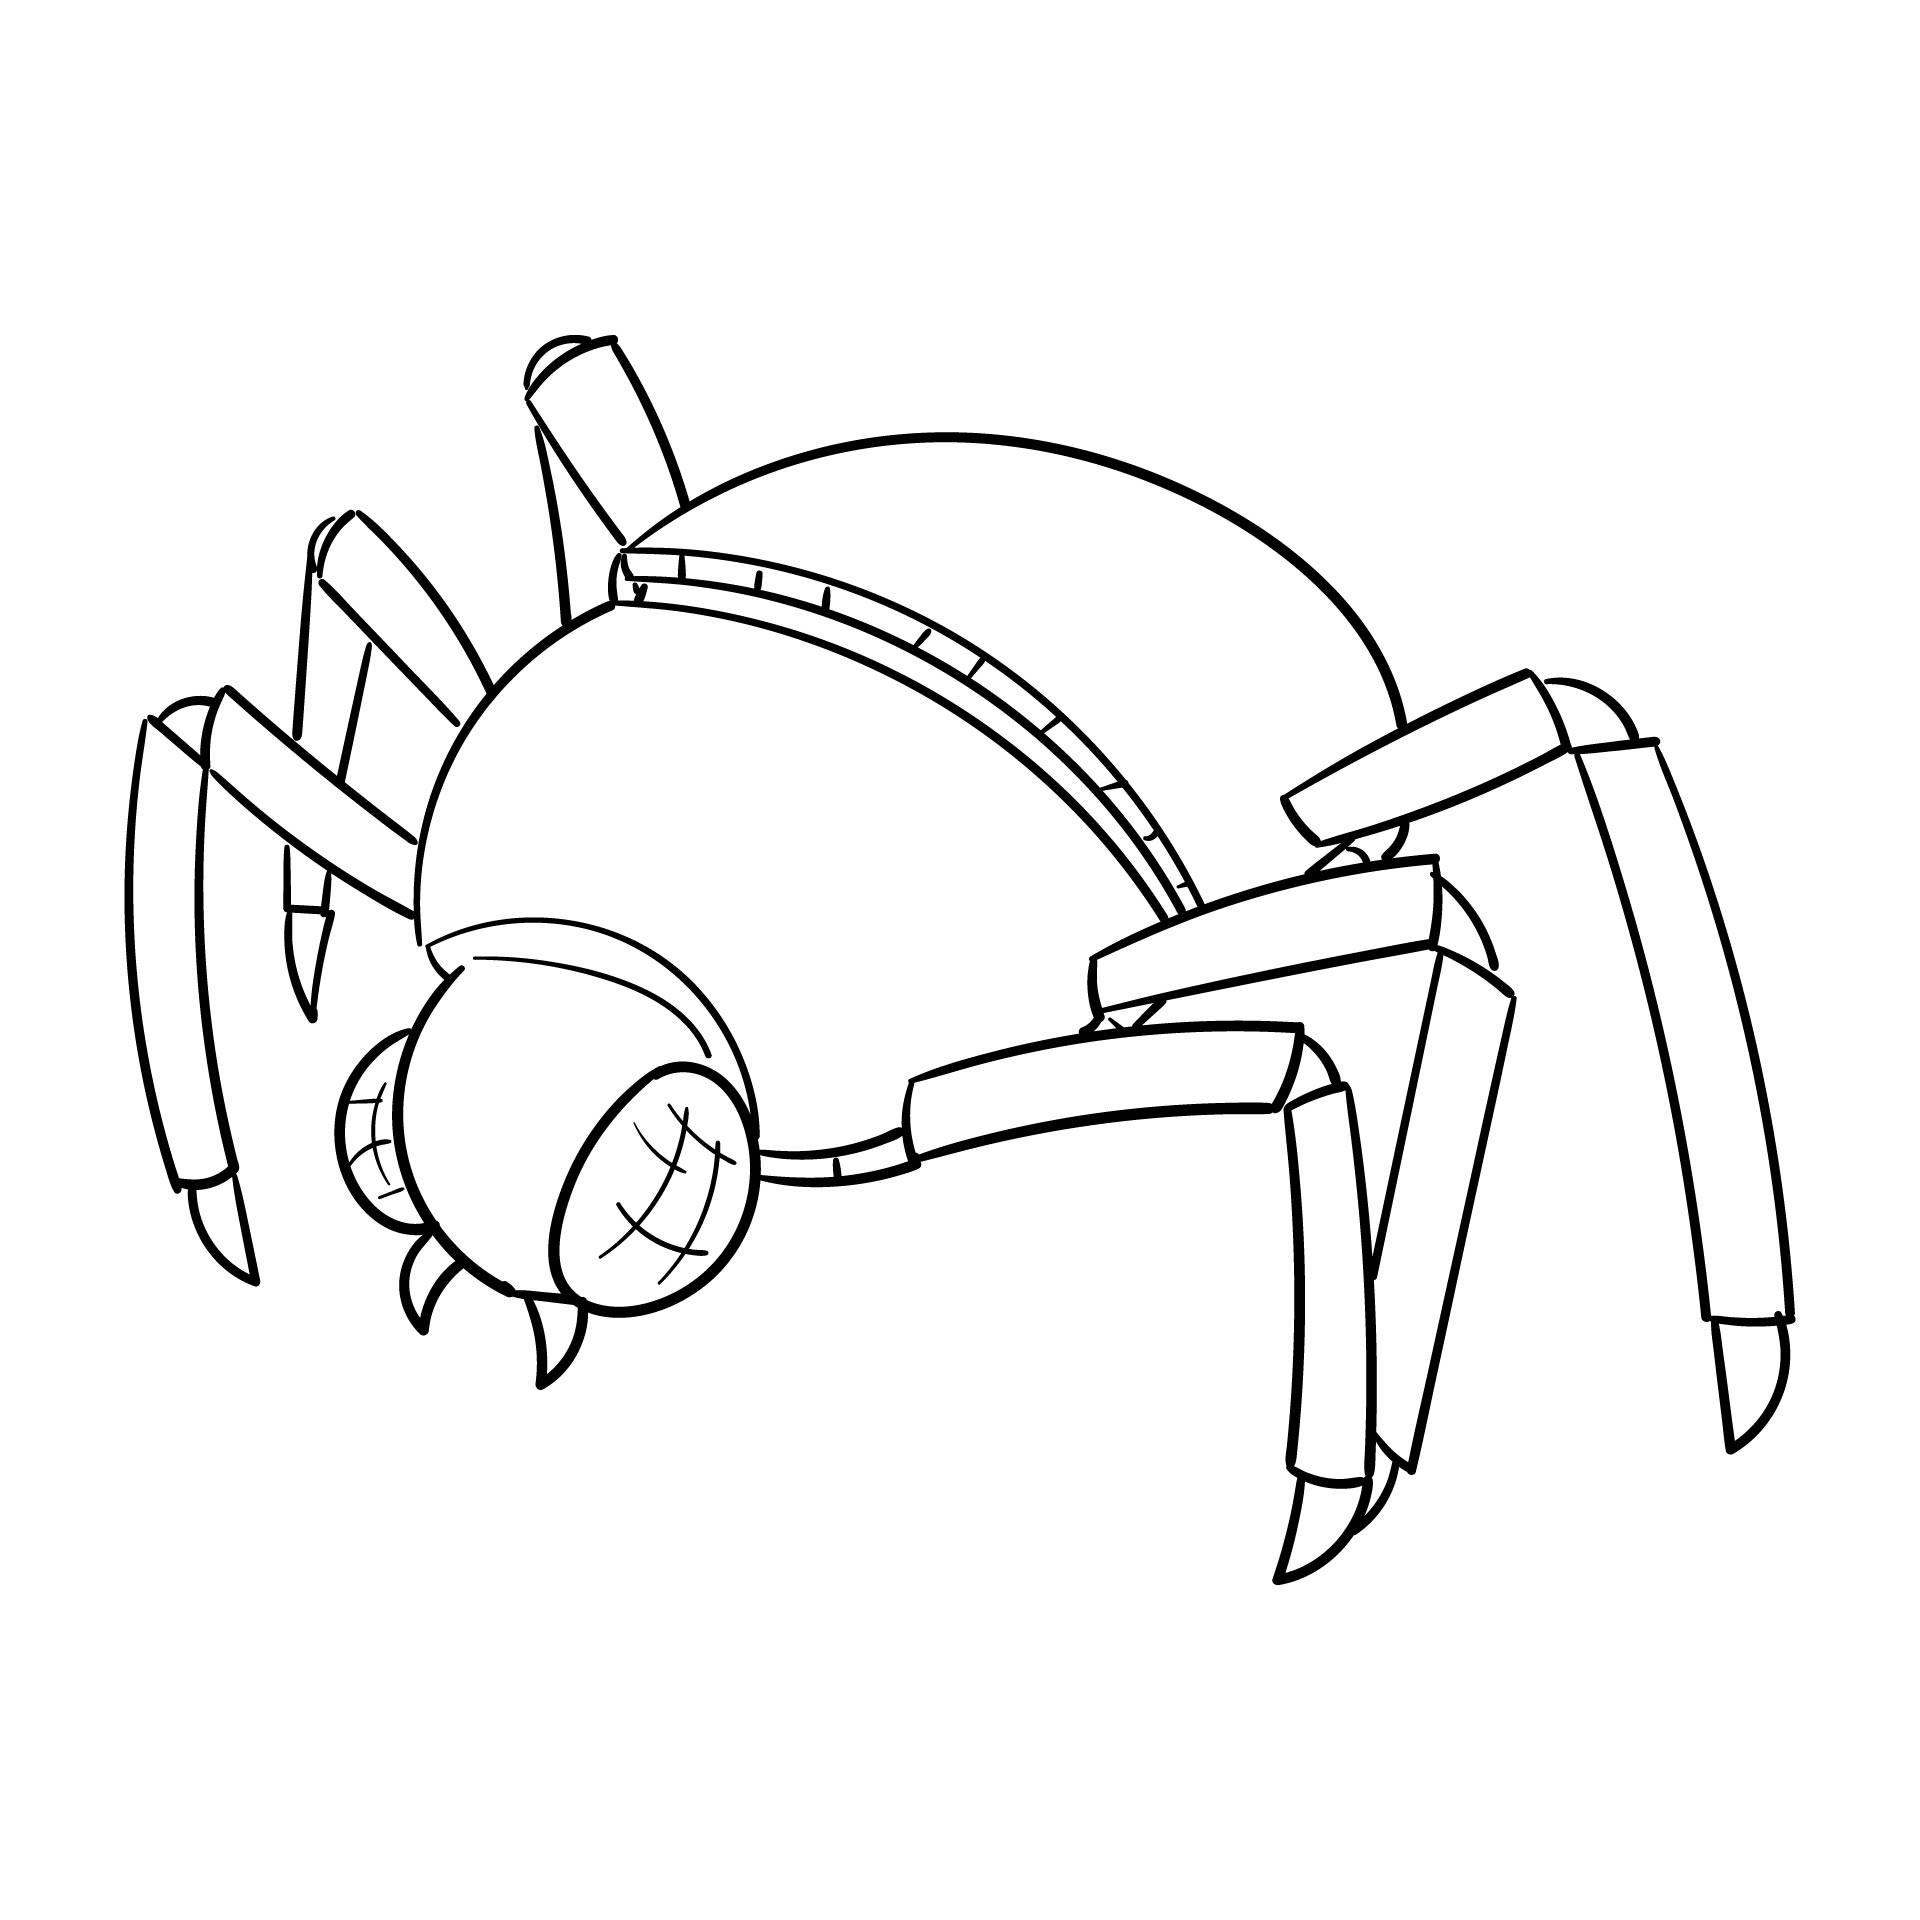 Halloween Spider Coloring Pages - 15 Free PDF Printables | Printablee